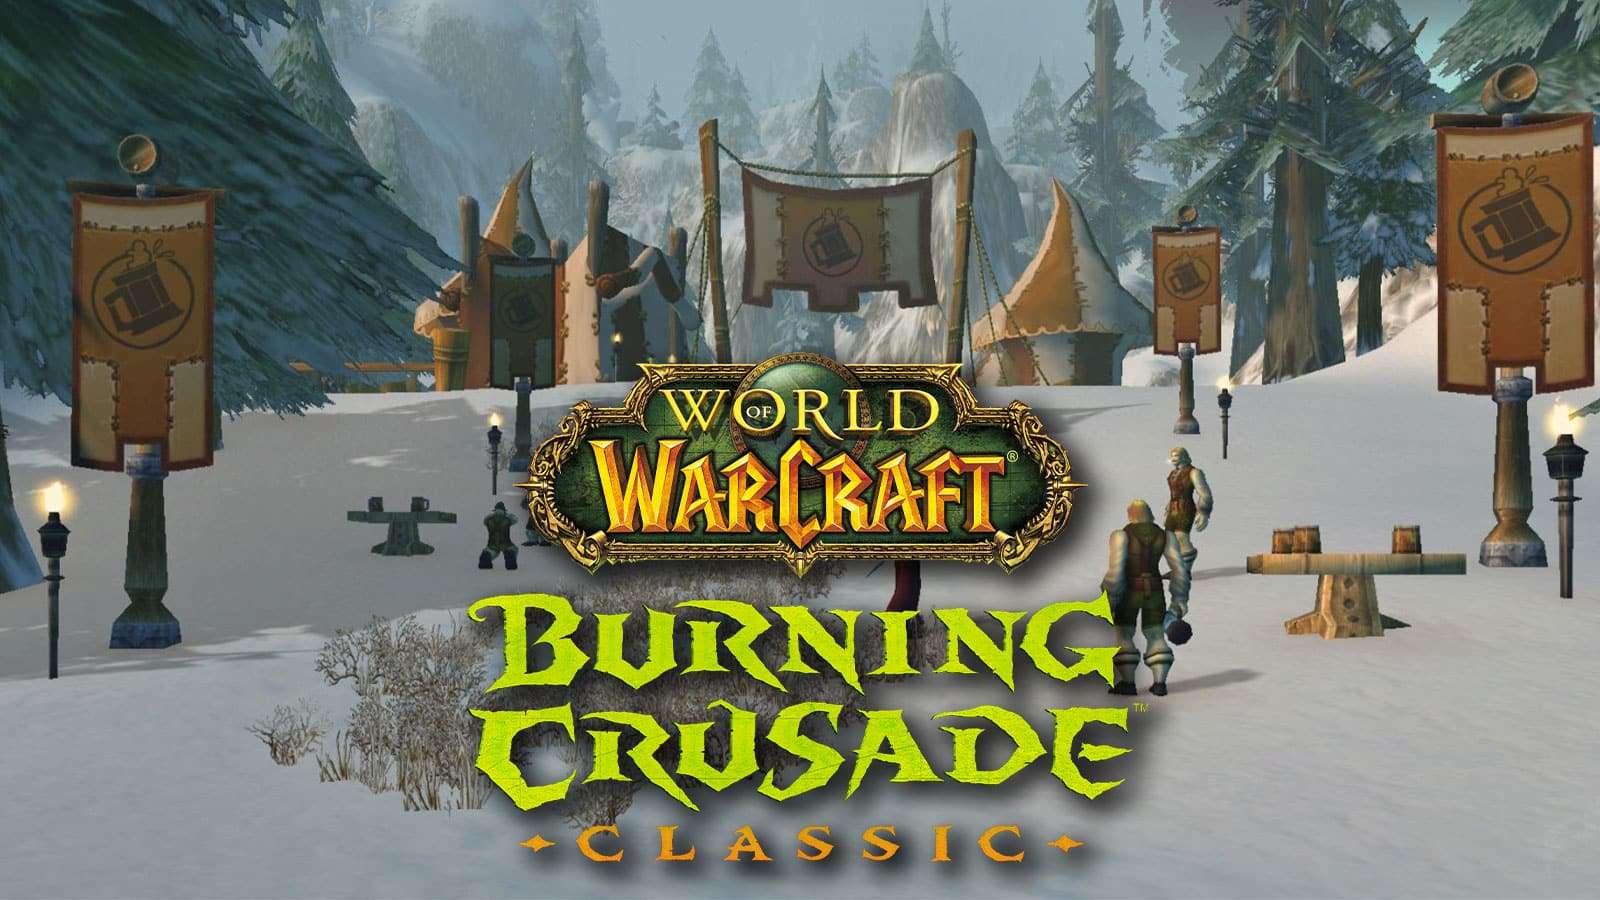 WoW Classic burning crusade brewfest